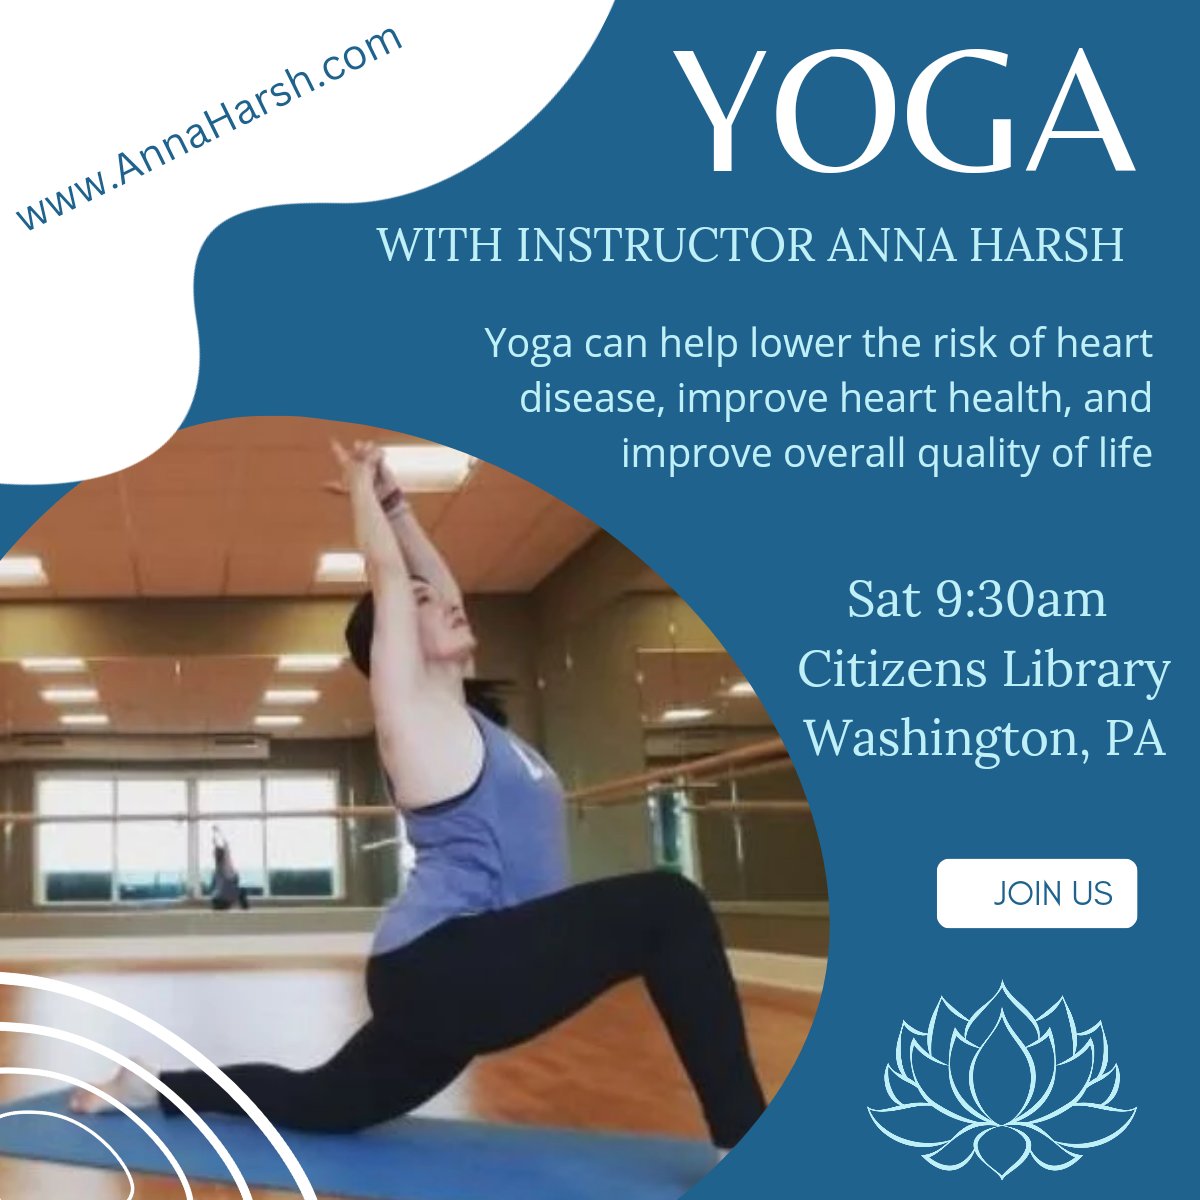 TODAY ♥️💪✨️☀️👀
Yoga 9:30am Citizens Library Washington PA.  Join me.
I'll be leading a Vinyasa flow class. annaharsh.com 
#WashingtonPa #yogaatthelibrary #yogaWithAnnaHarsh